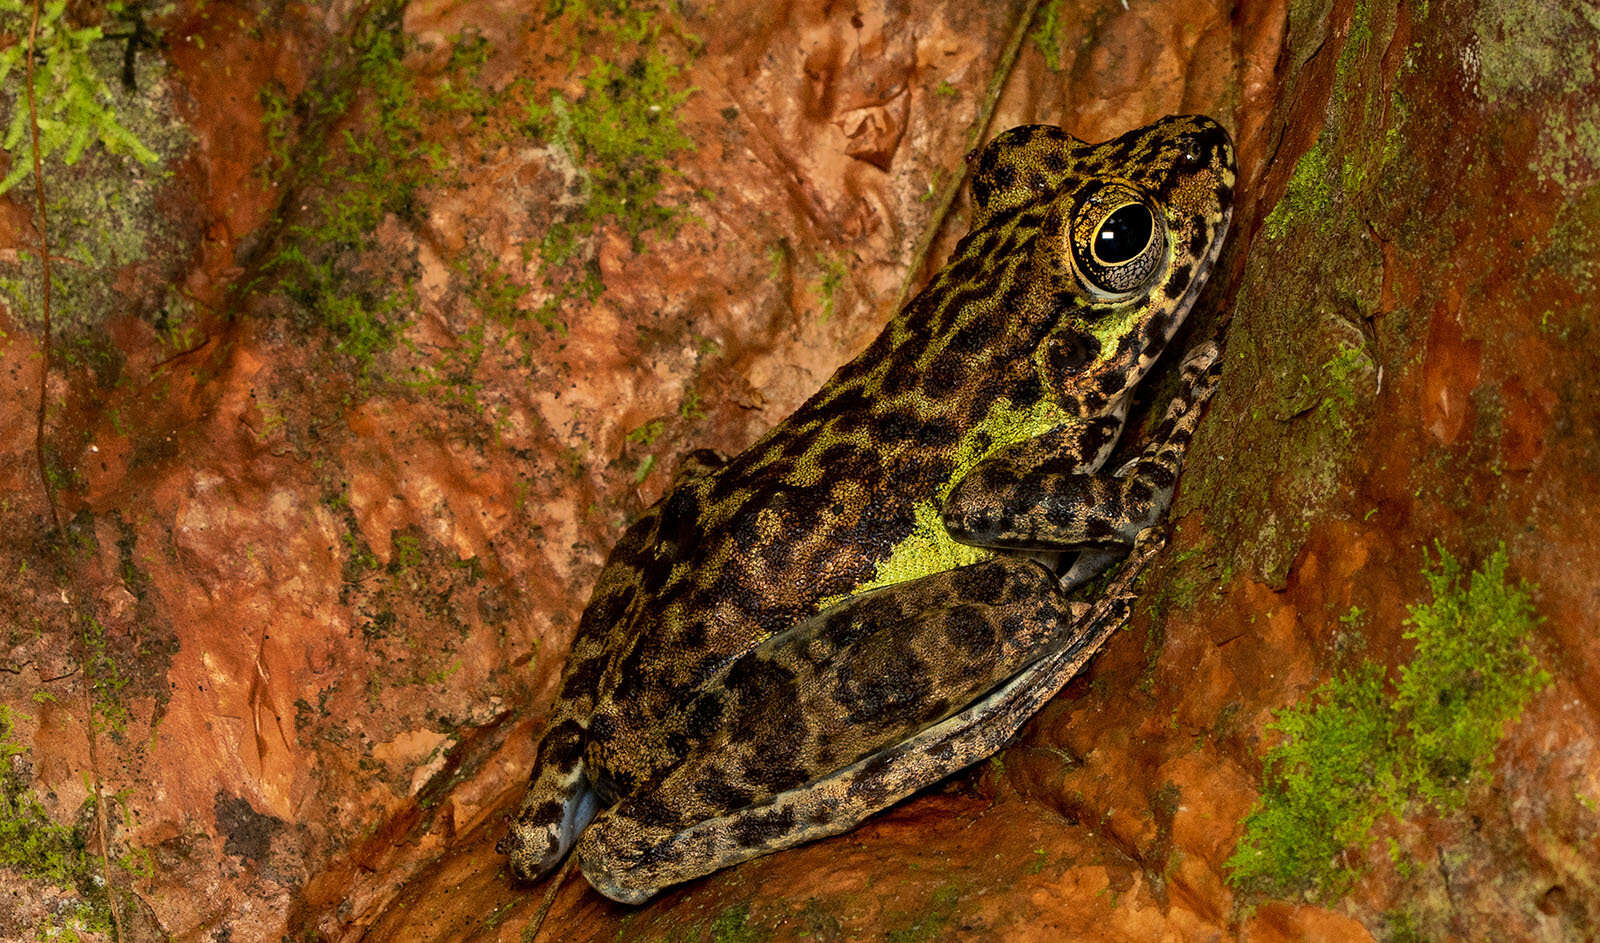 Image of Peninsular Torrentfrog